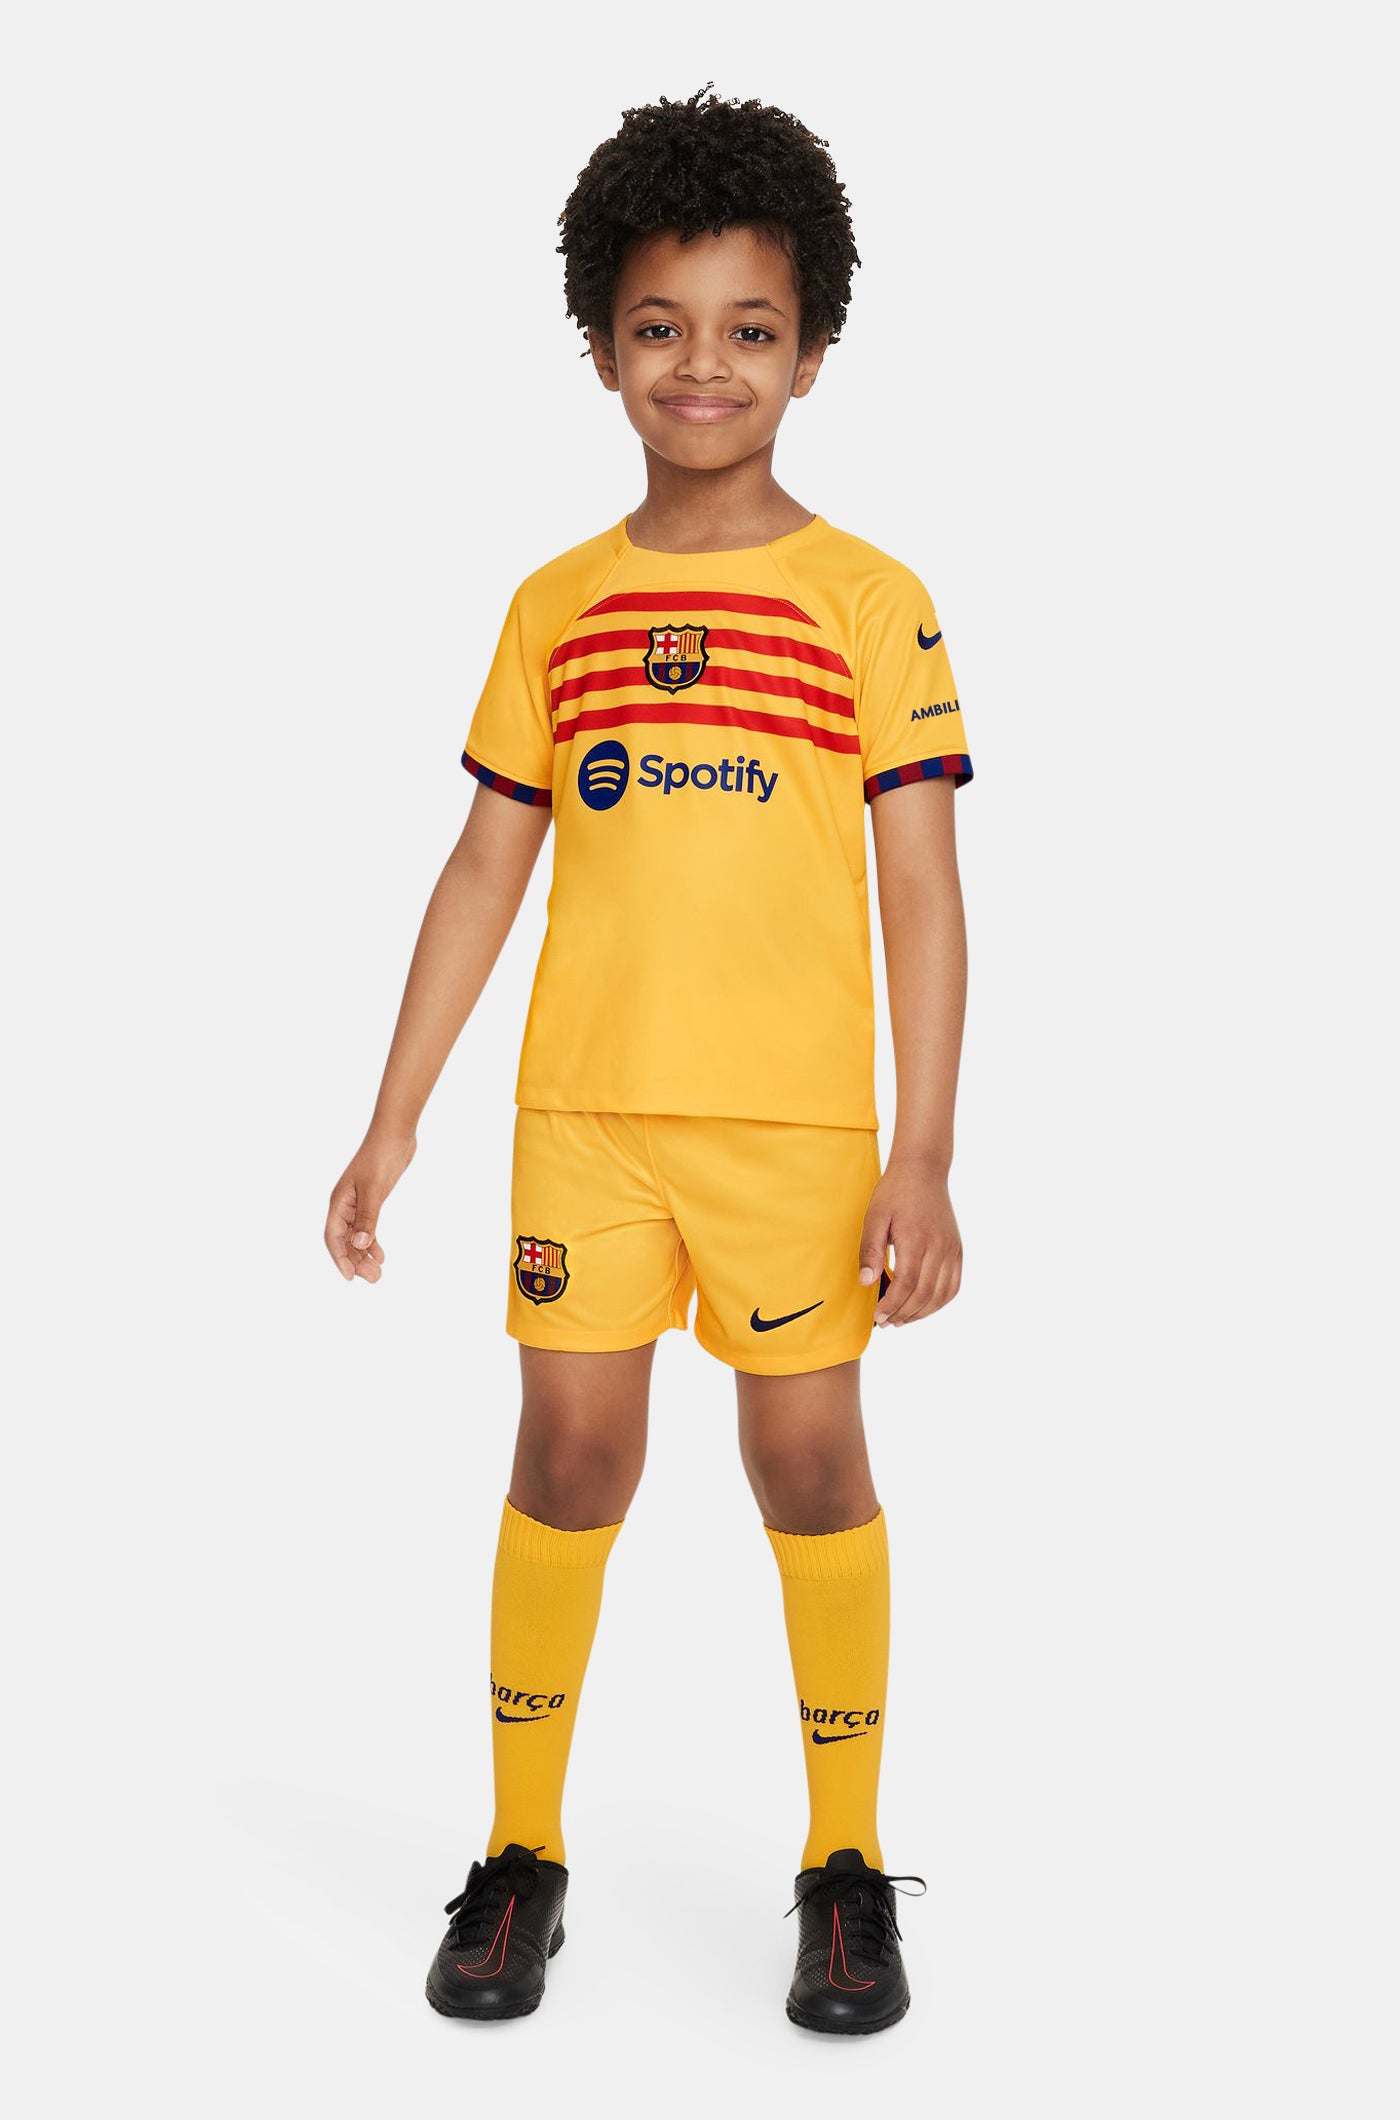 FC Barcelona fourth kit 22/23 - Little Kids - ROMEU